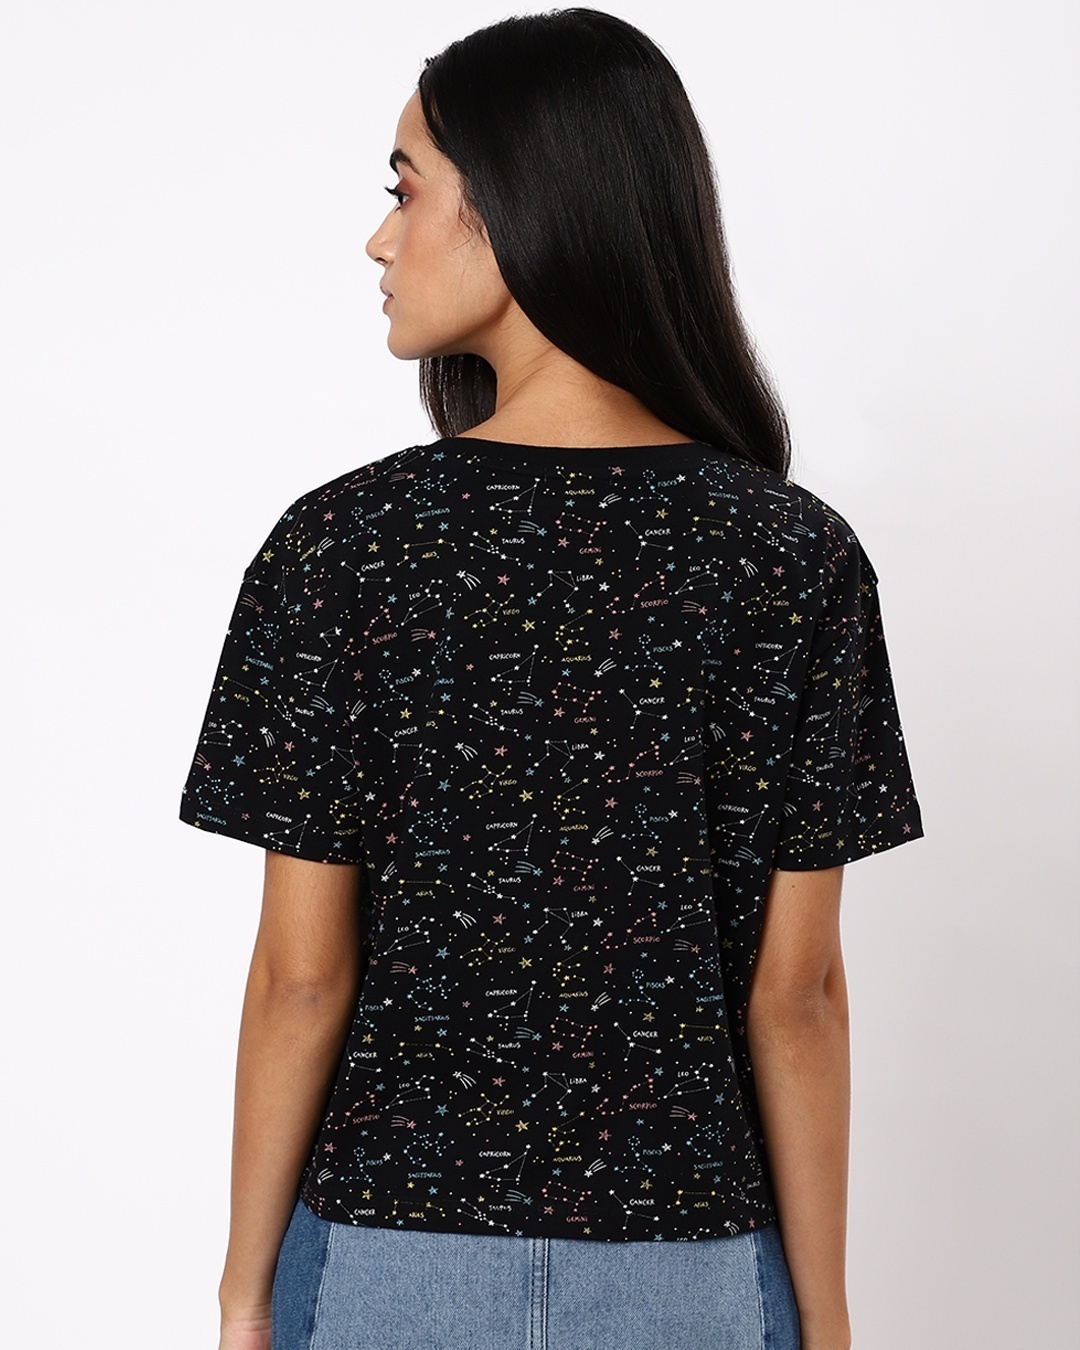 Shop Women's Black All Over Printed T-shirt-Design